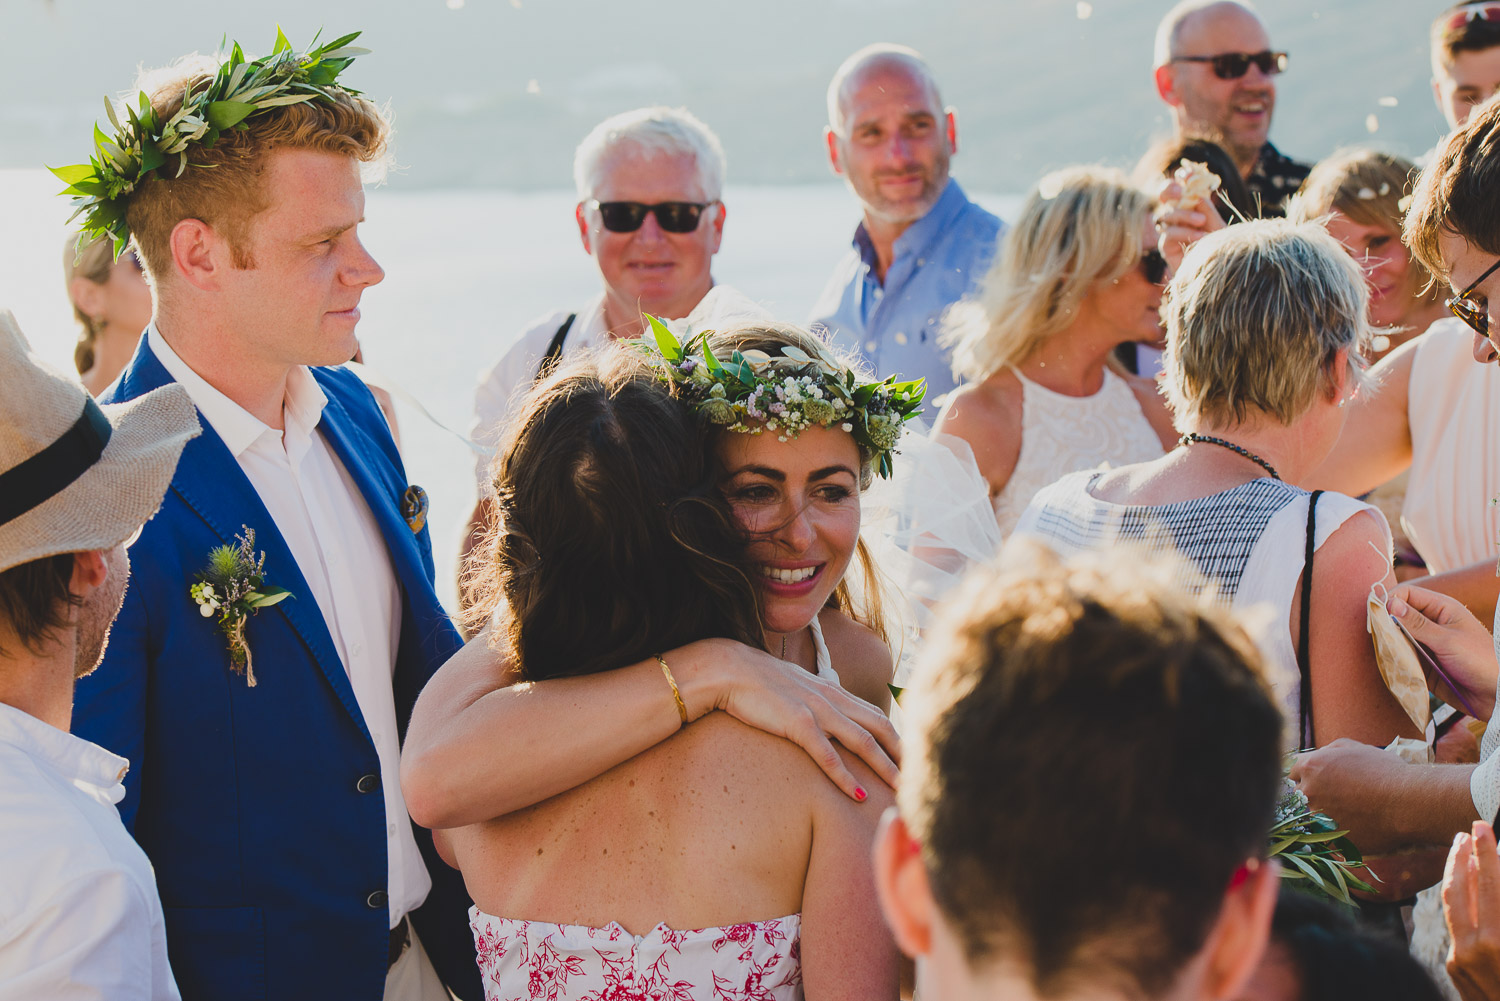 Wedding photographer Mykonos: bride hugs a friend at Mykonos wedding.